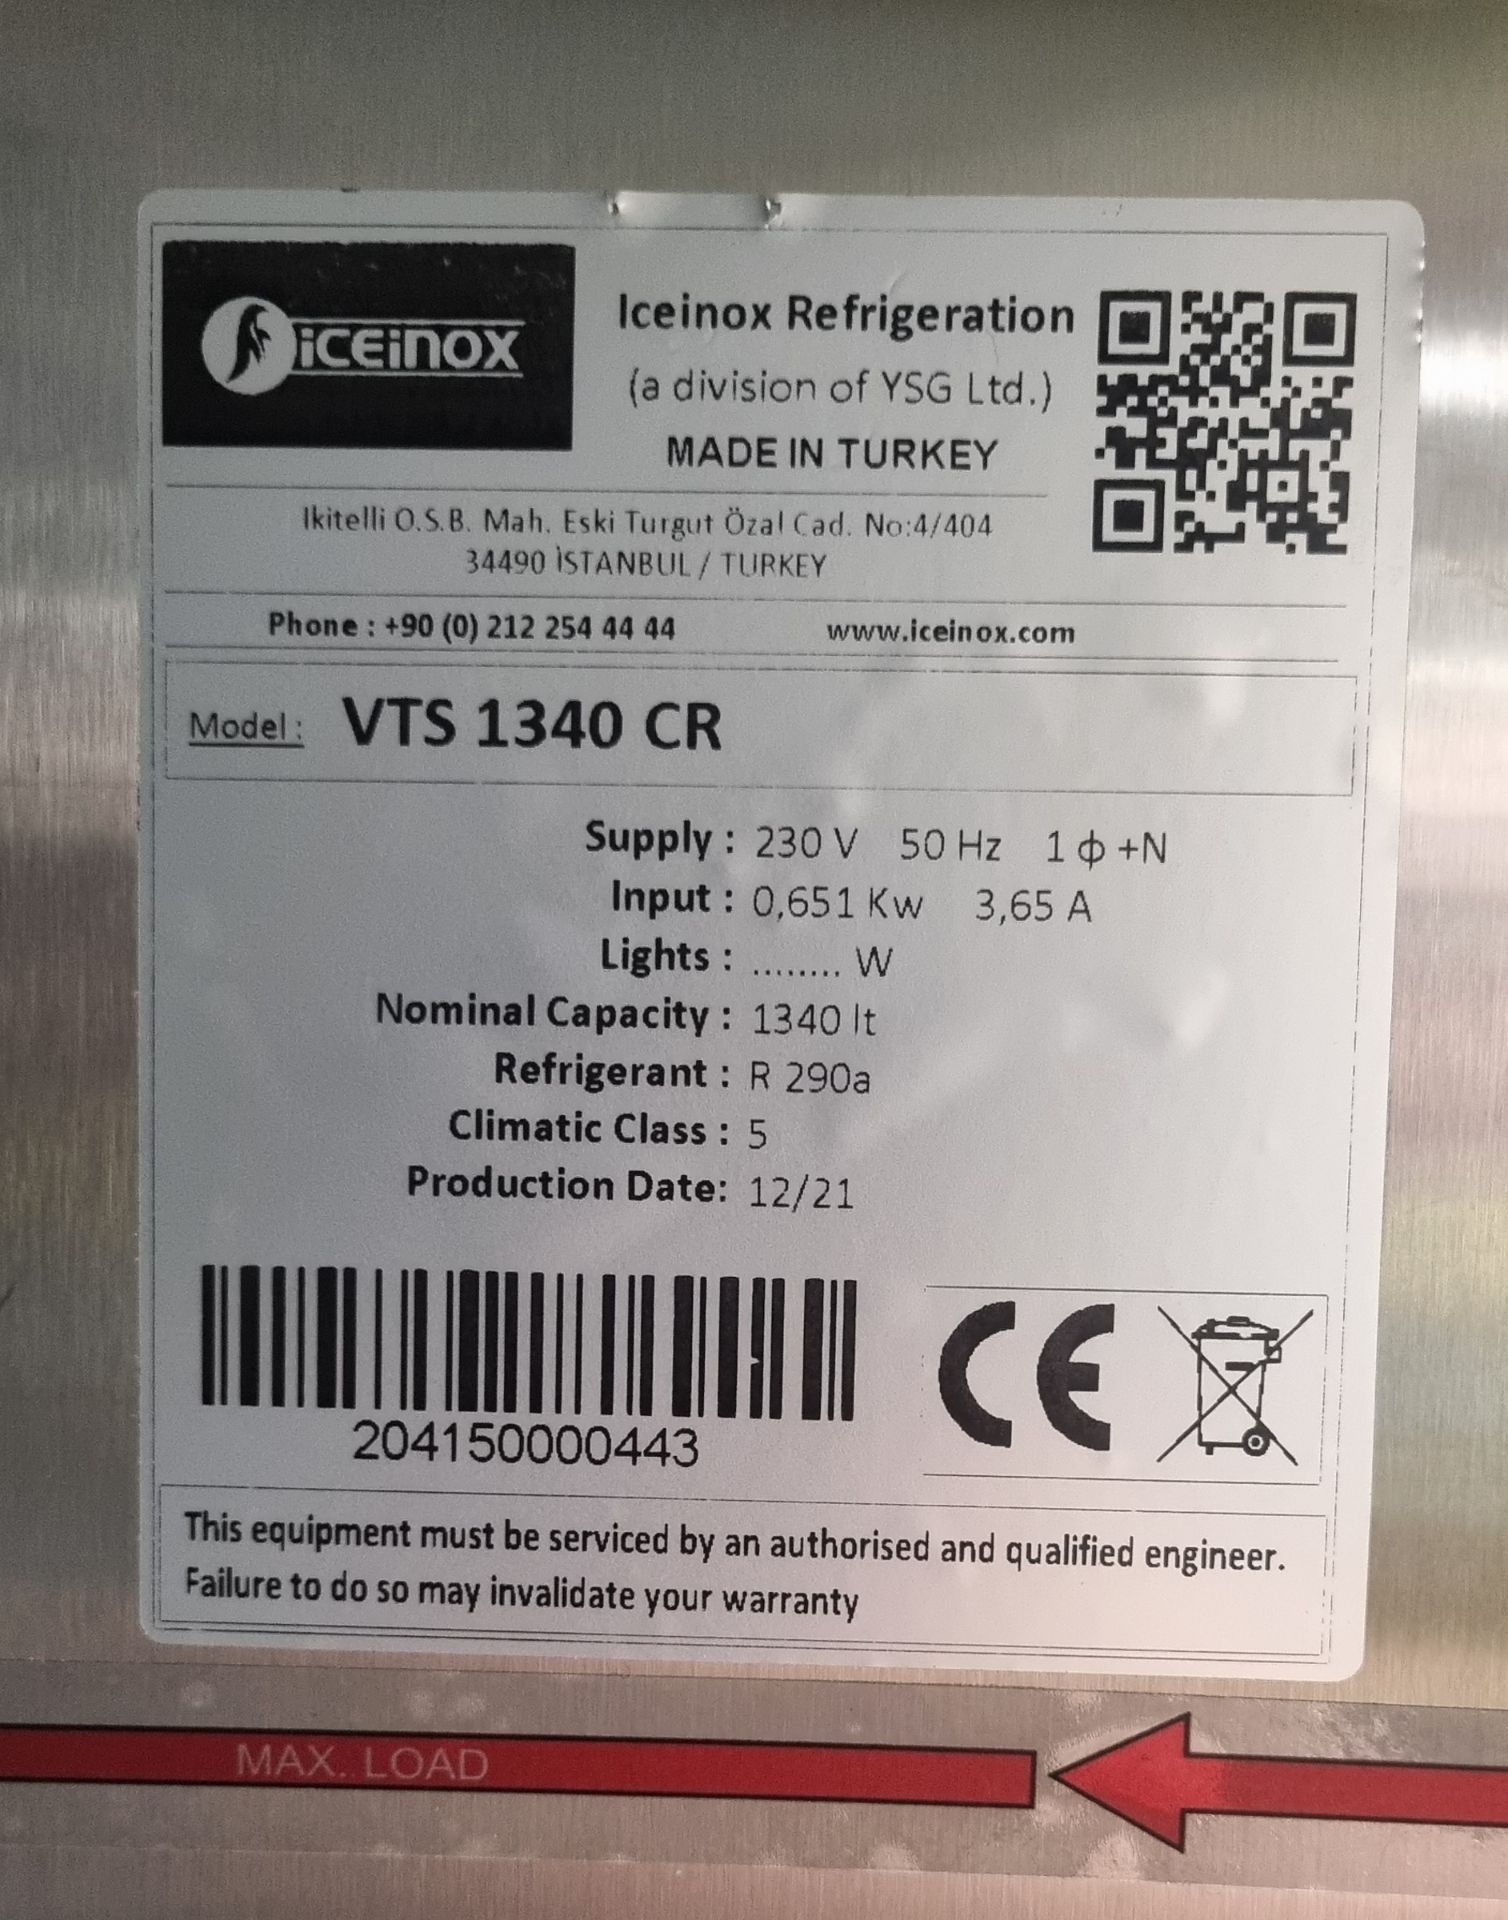 Iceinox VTS 1340 CR stainless steel upright, double door refrigerator - Image 6 of 11